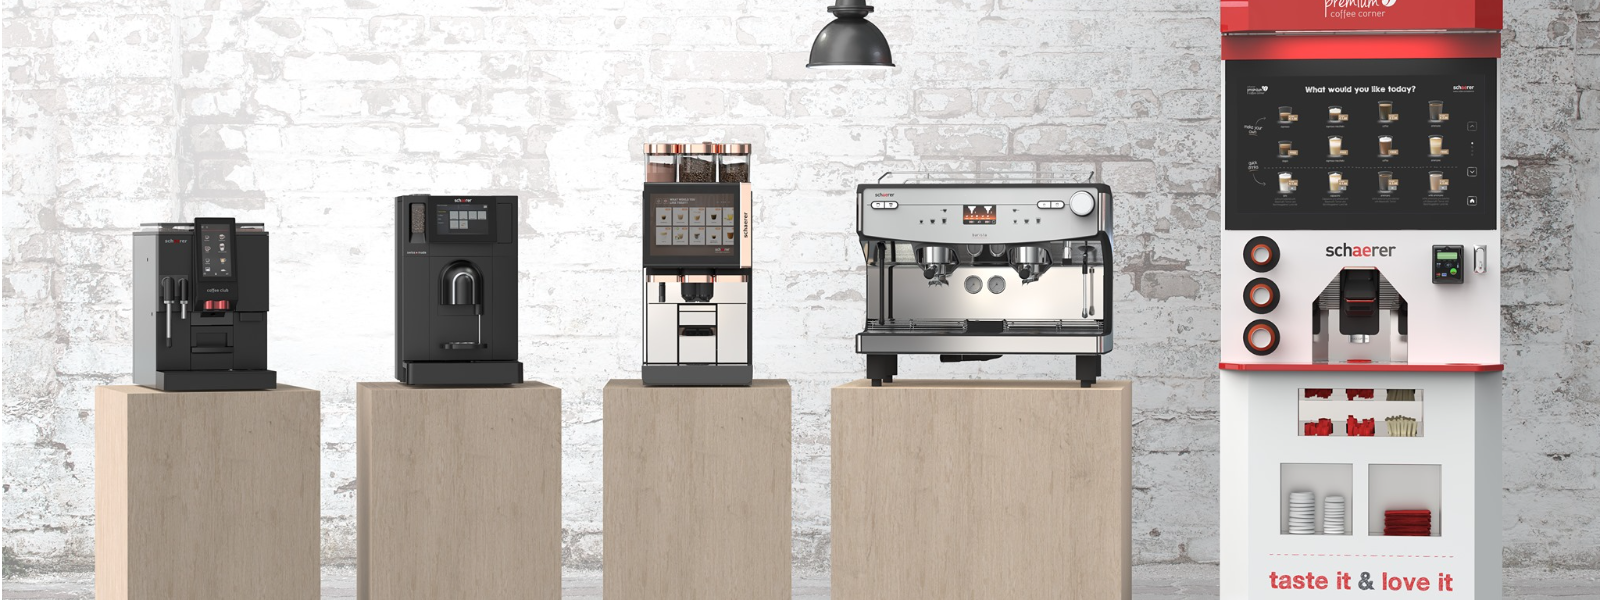 COFFEE HABITS OÜ - We specialize in coffee machine rental, sales, maintenance, and promoting genuine coffee enjoyment.